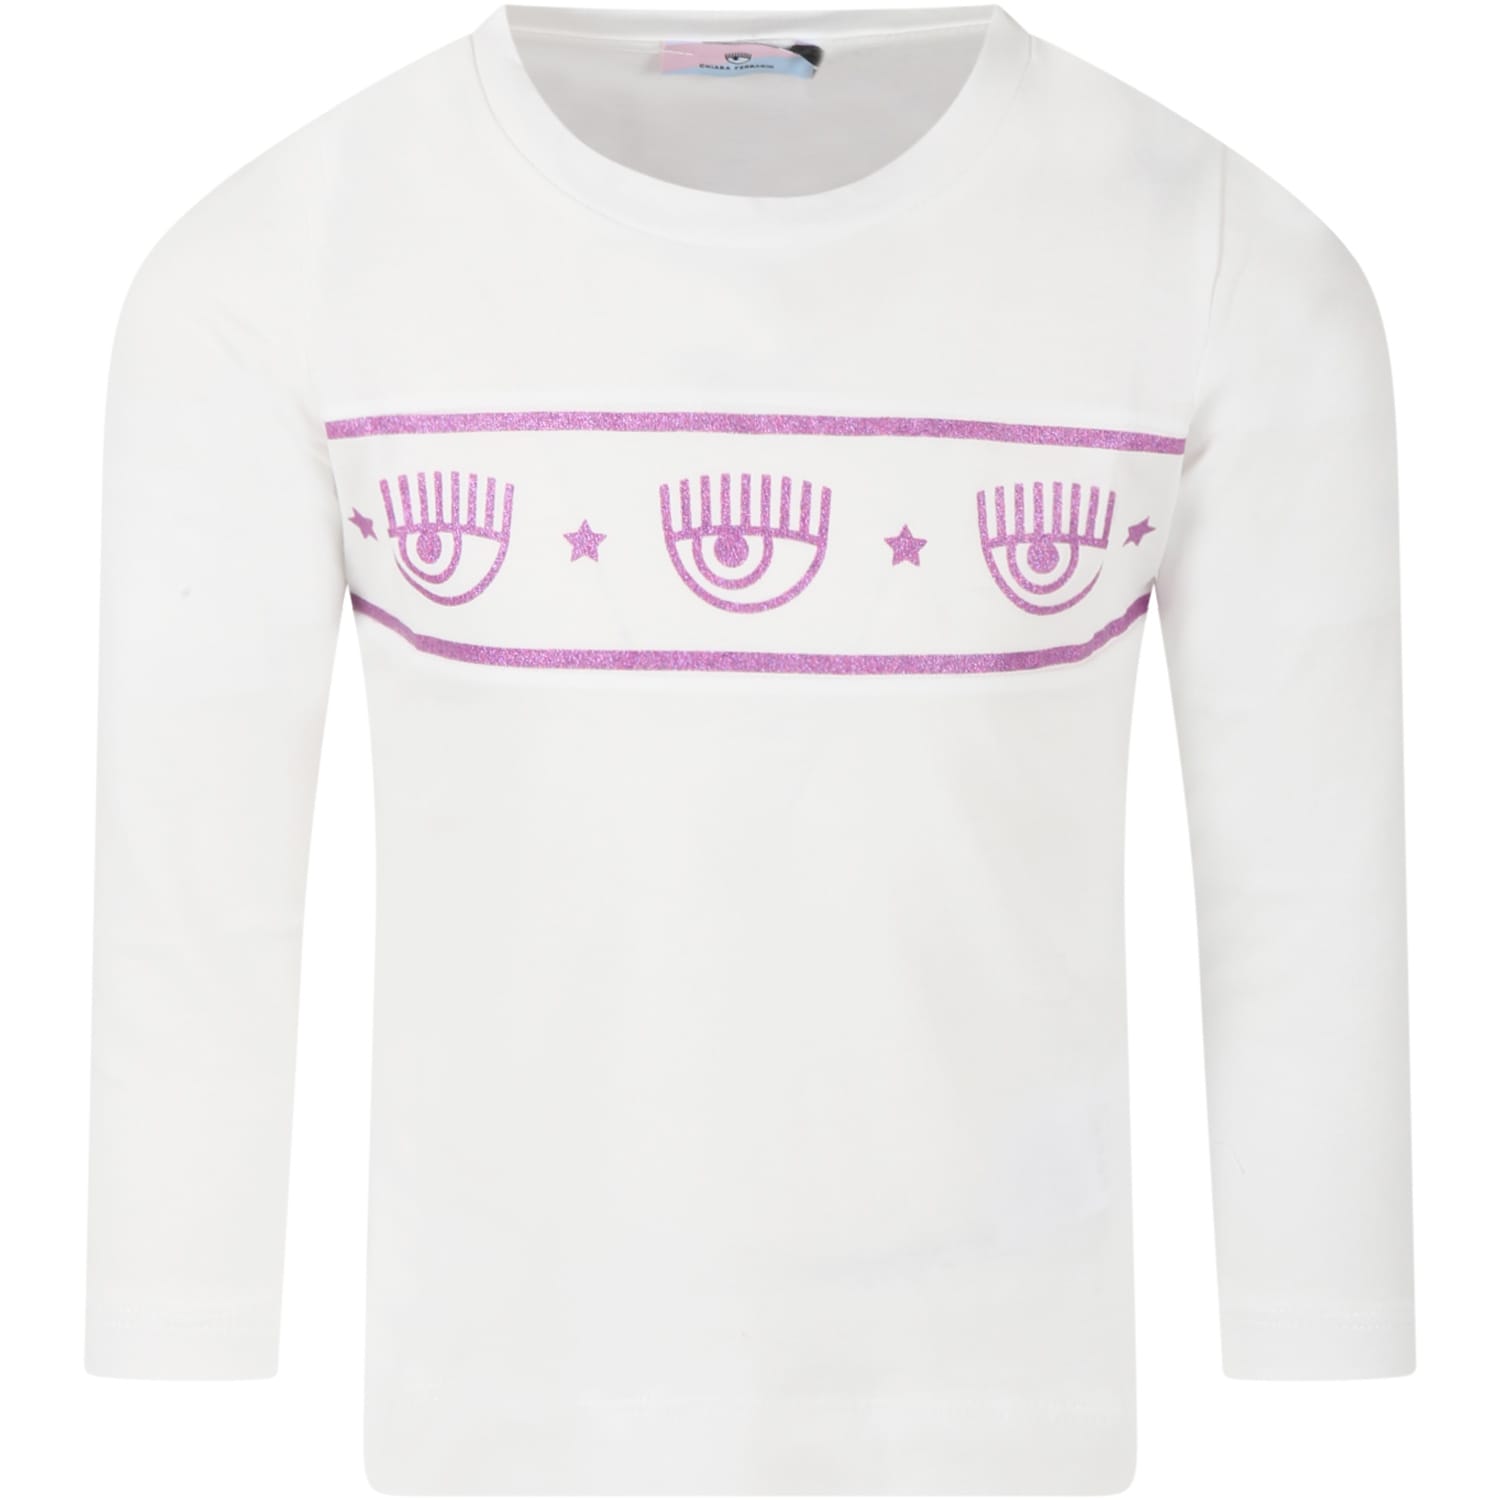 Chiara Ferragni White T-shirt For Girl With Iconic Purple Blinking Eye